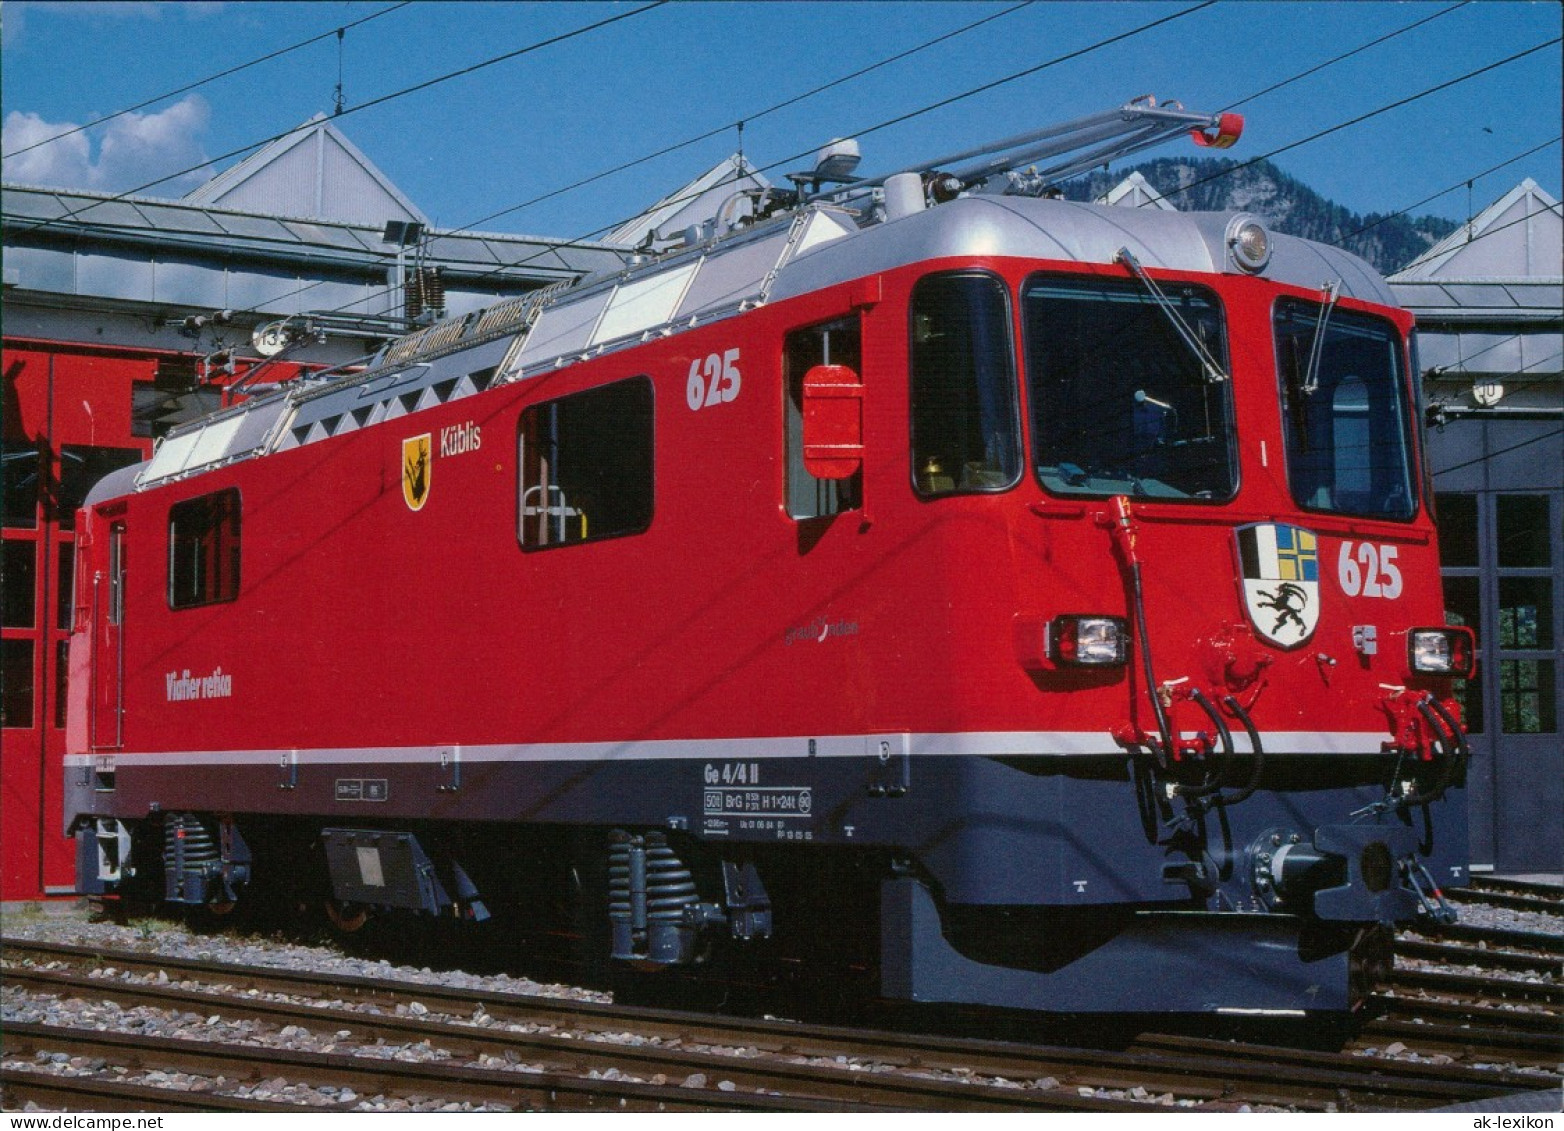 Verkehr Eisenbahn & Zug-Lokomotive «Küblis» Drehscheibe Landquart 1984 - Trains